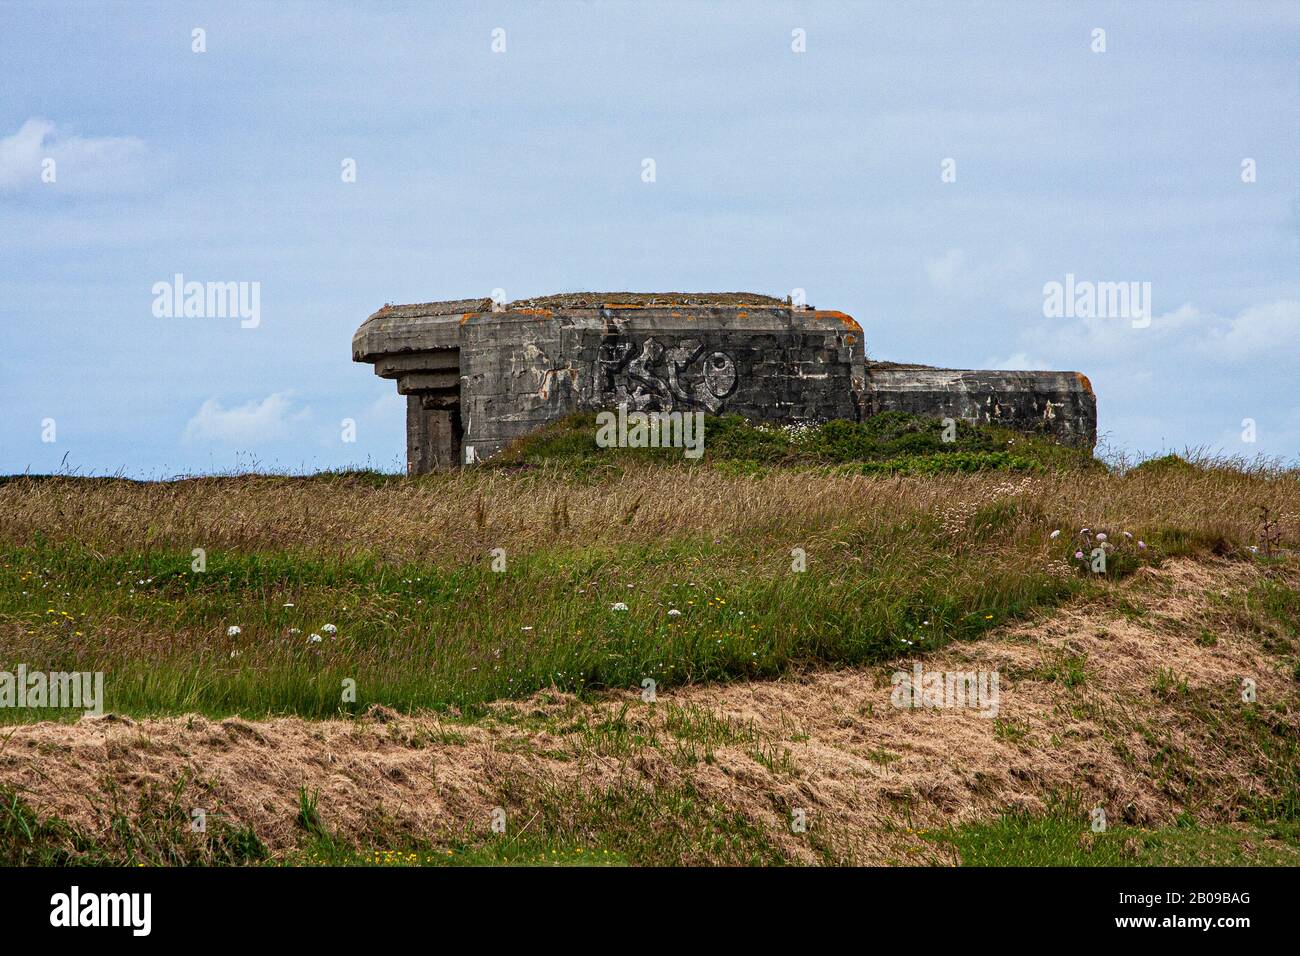 France, Brittainy, Pen Hir, Musee Memorial, Battle of the Atlantic, Poite de Pen Hir, Bunker Atlantikschlacht, WWII, Atlantic Wall, Stock Photo